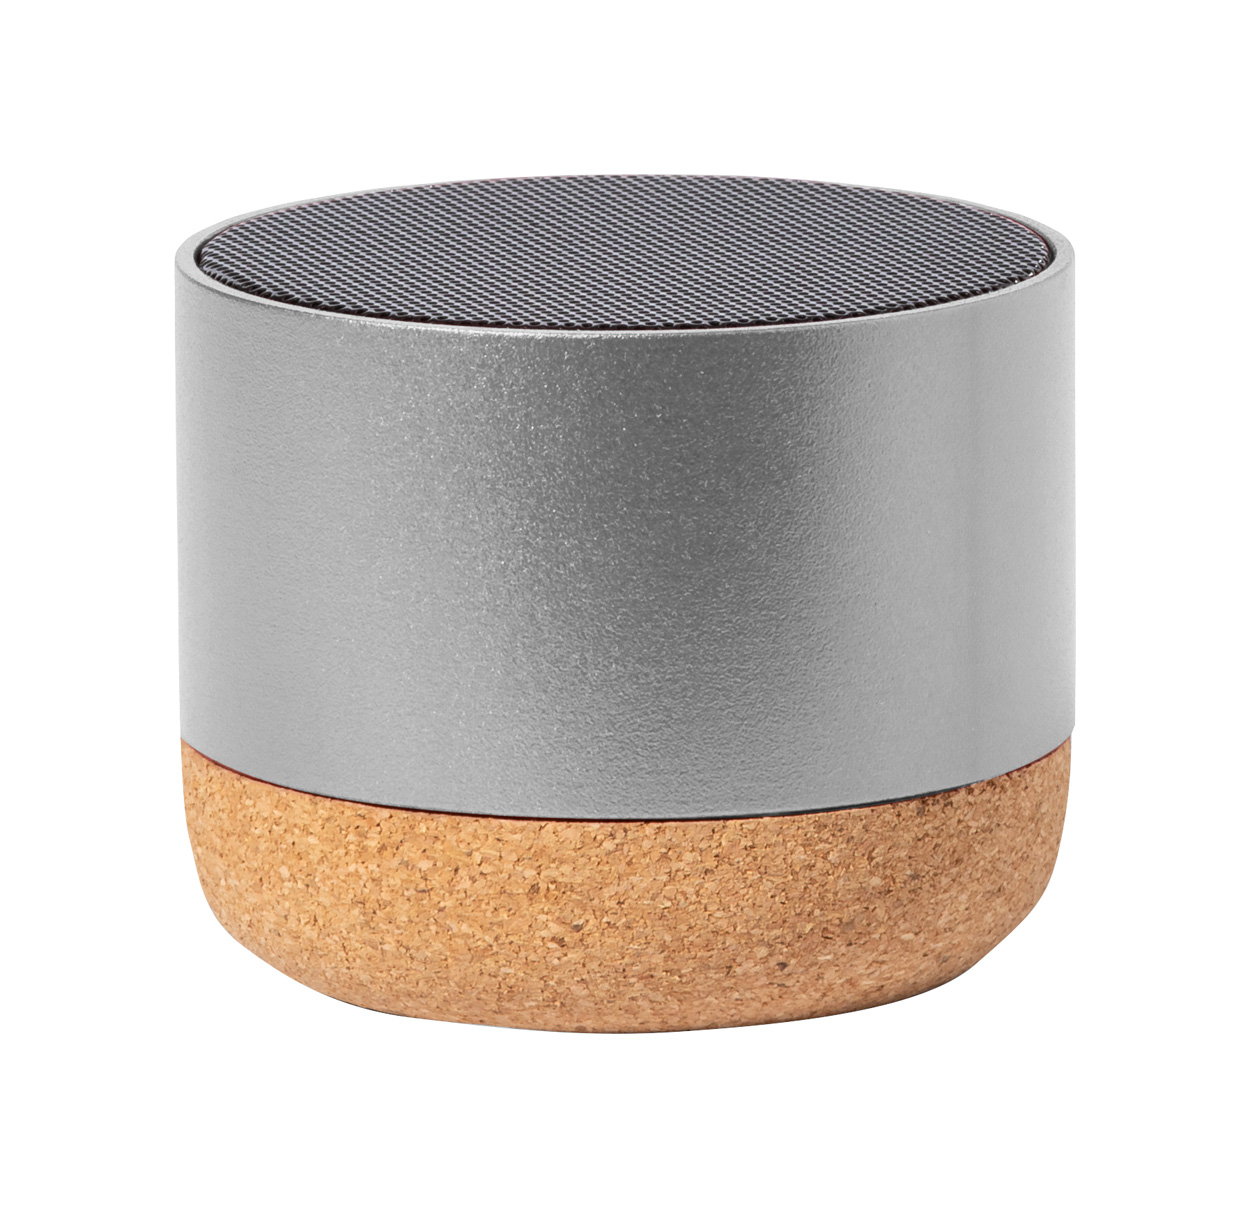 Moore bluetooth speaker - silver